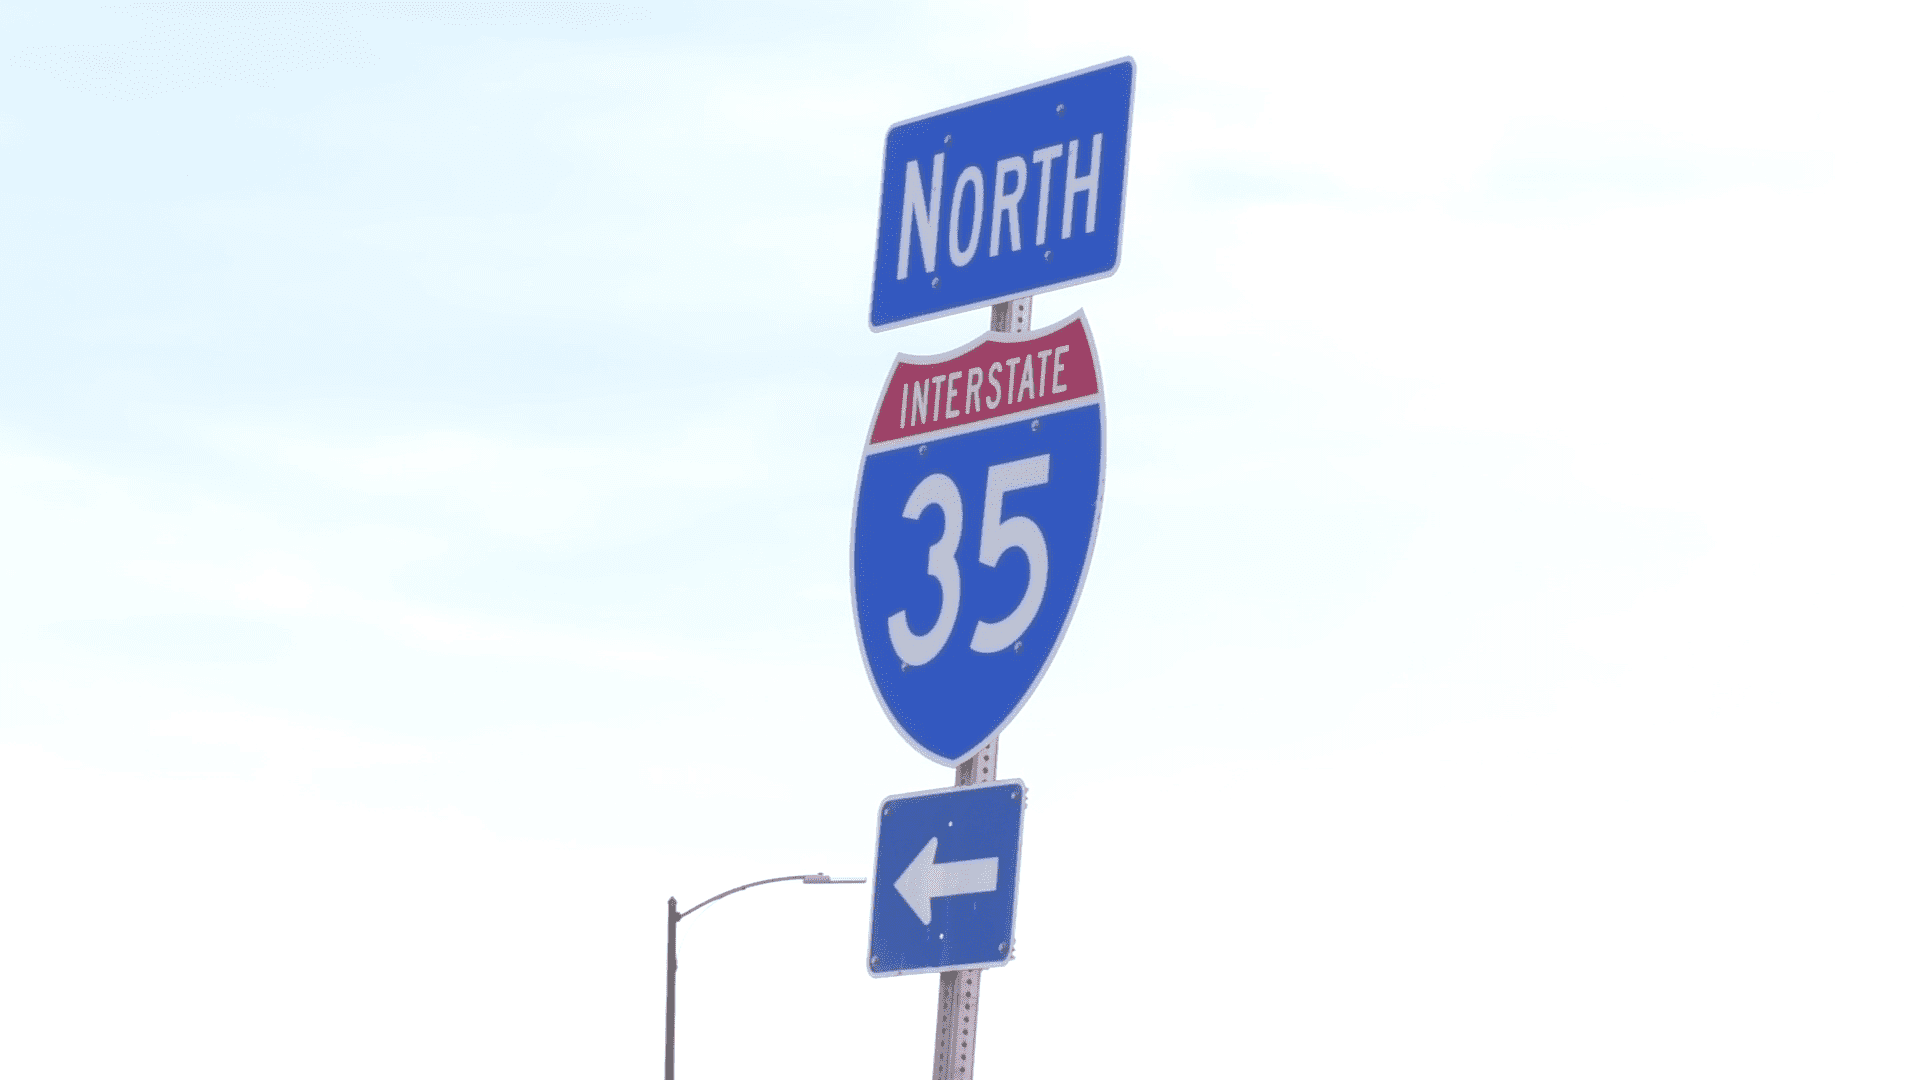 A Northbound I-35 sign